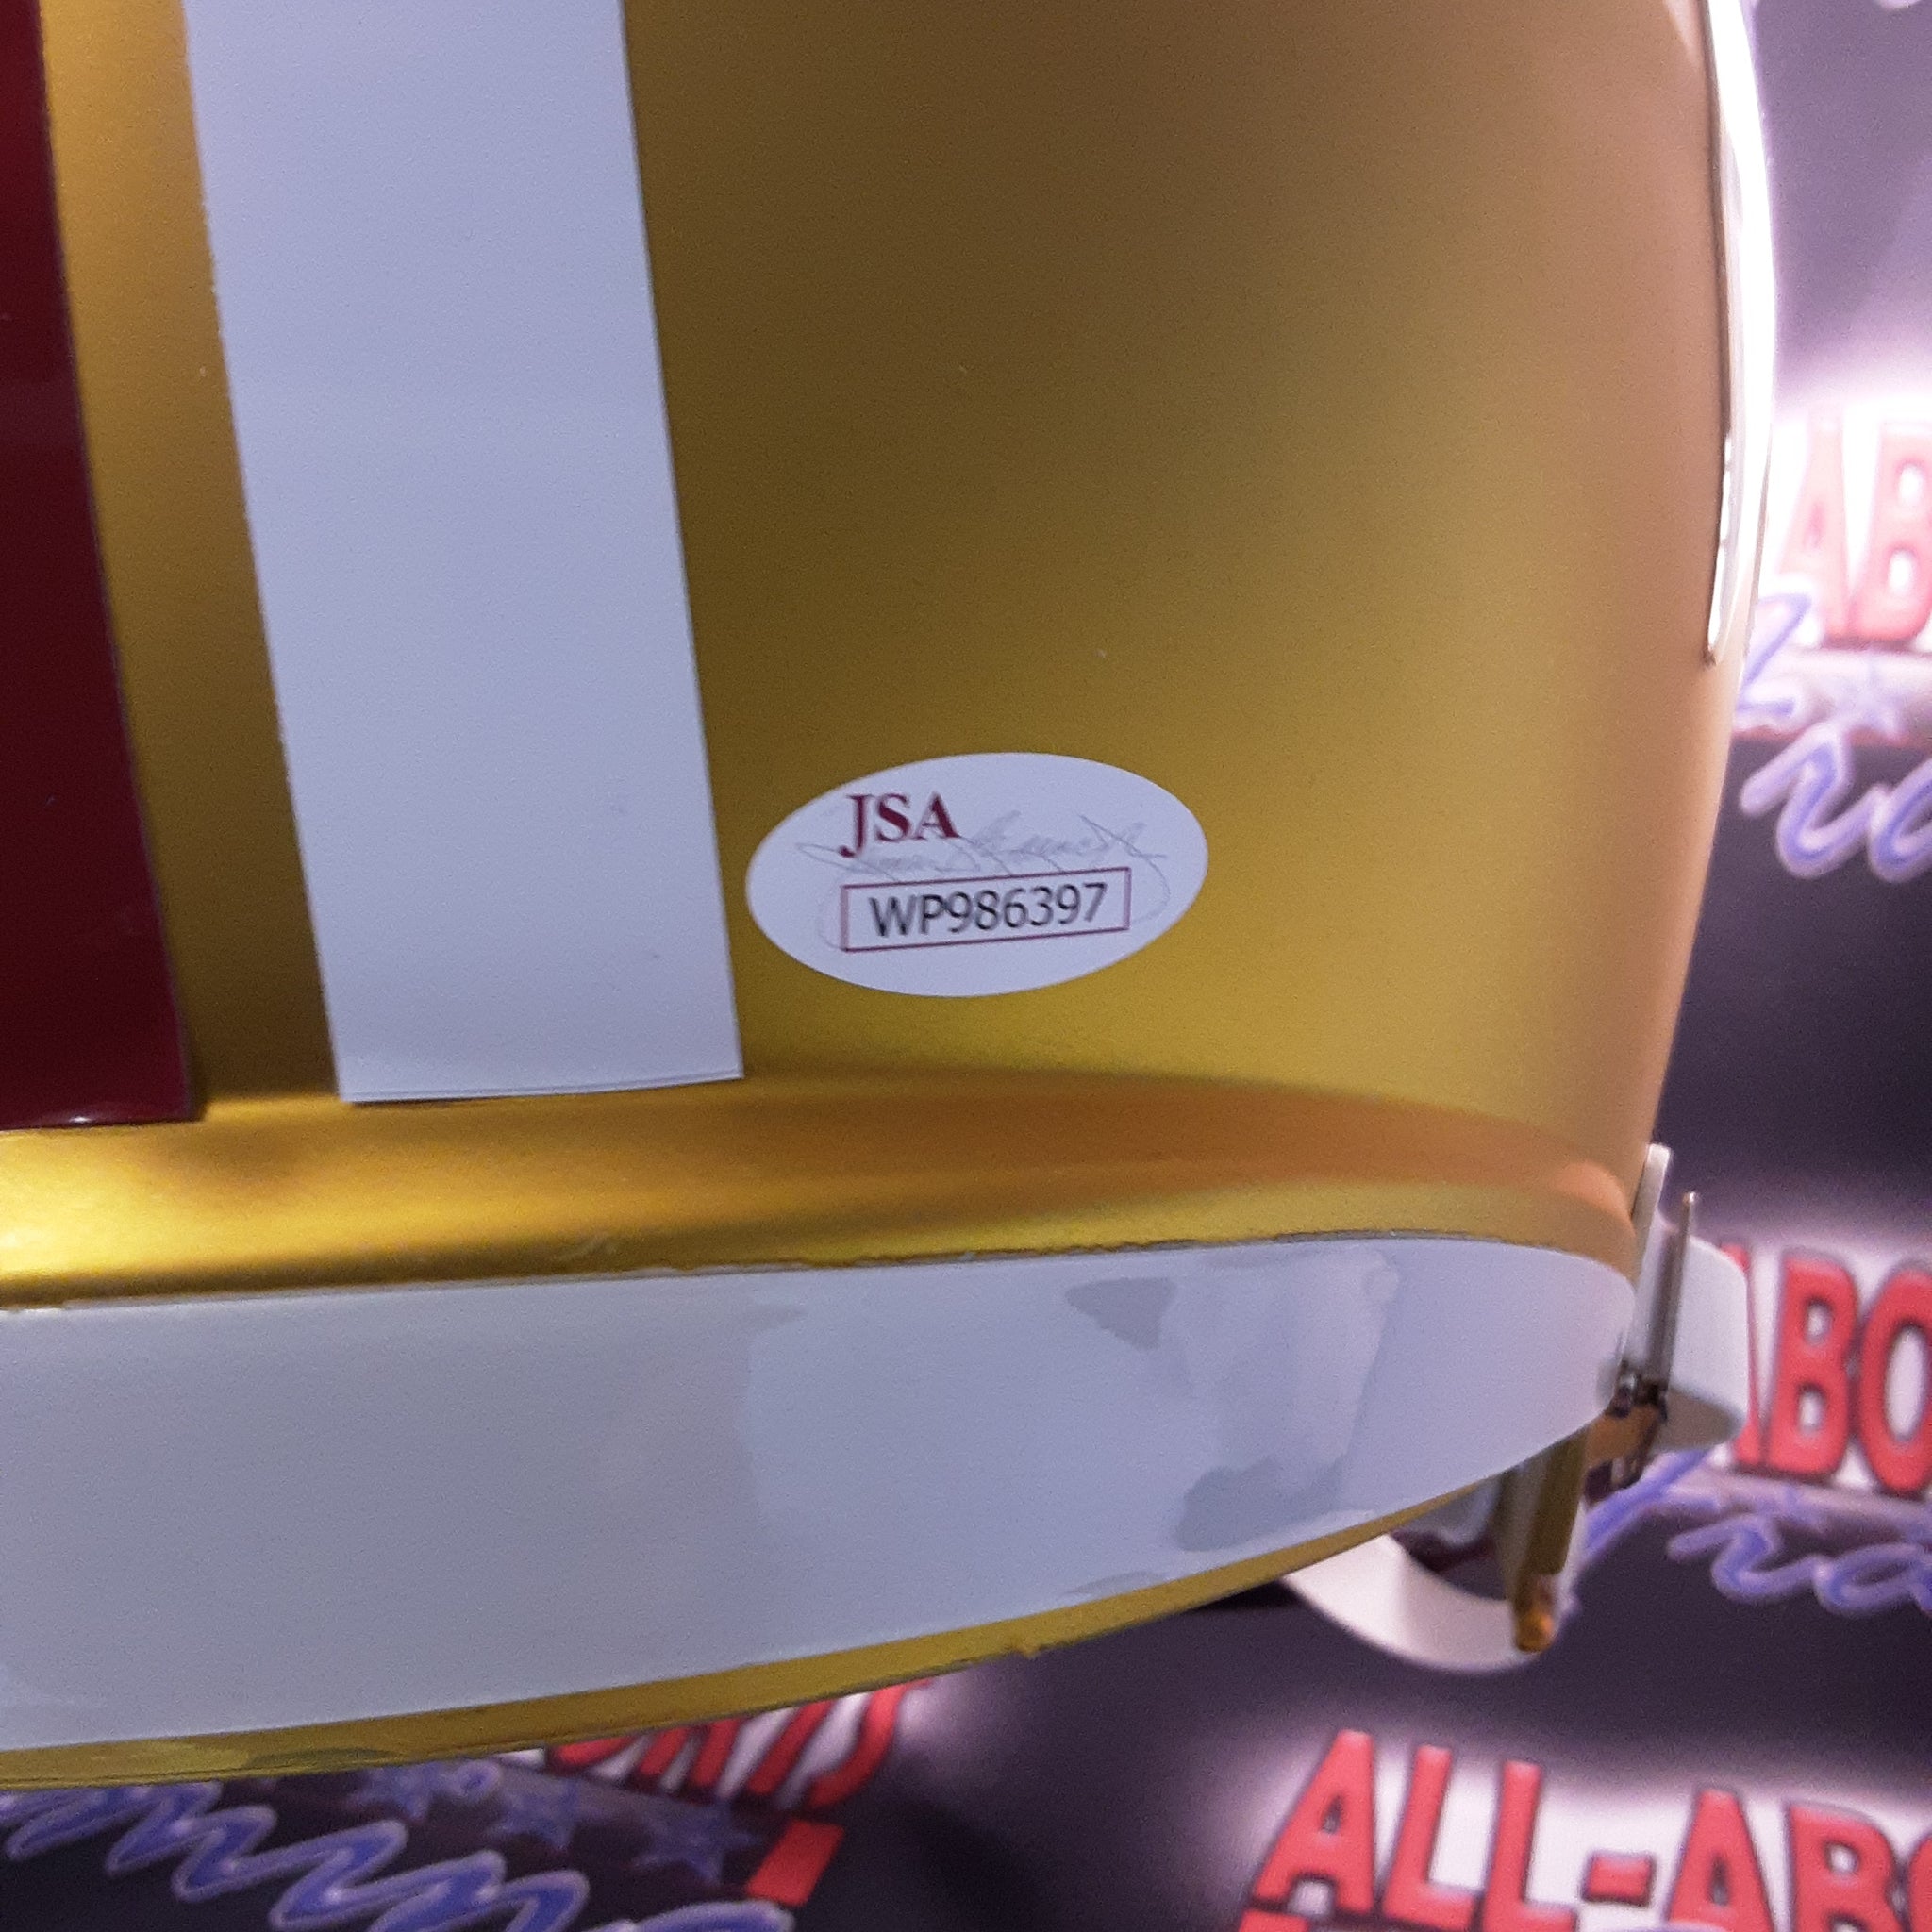 Jamison Crowder Authentic Signed Autographed BLAZE Full-size Replica Helmet JSA.